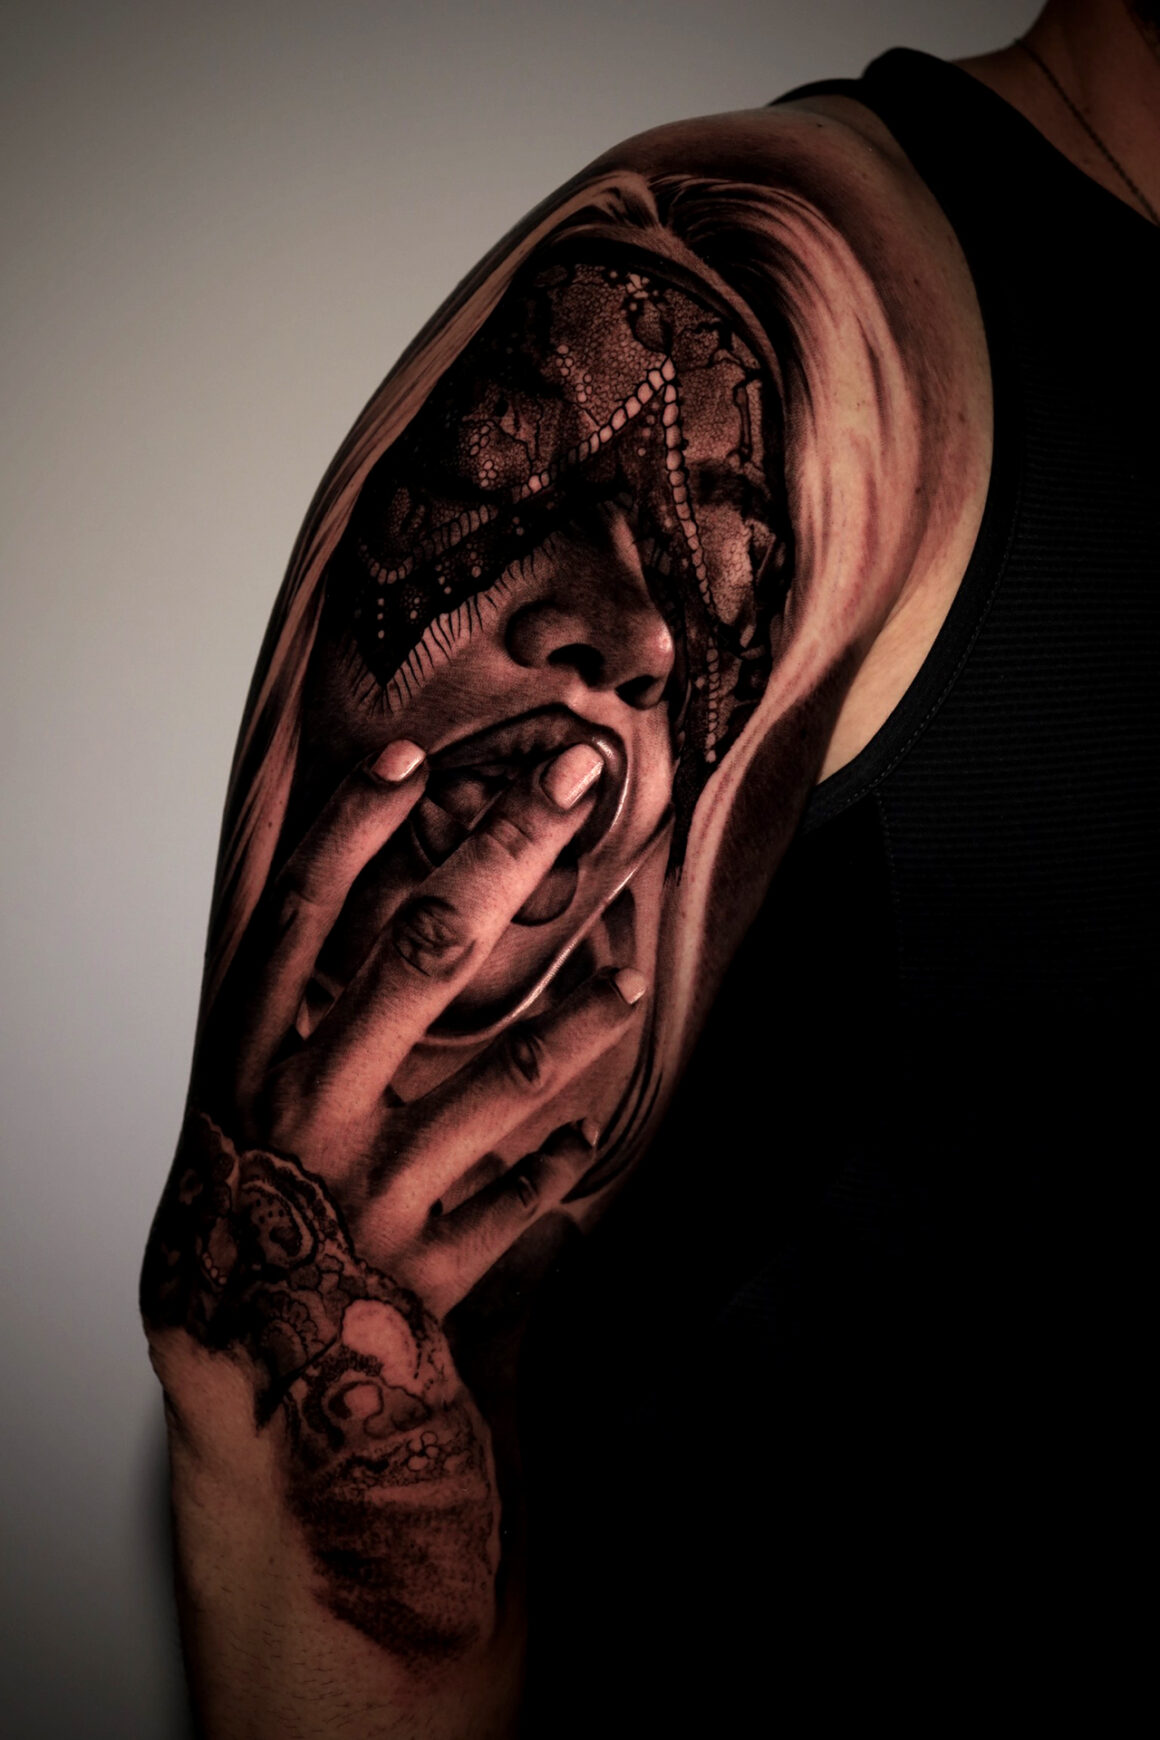 Tattoo by Jessica C. Vittorelli, @jc.vittorelli.ink